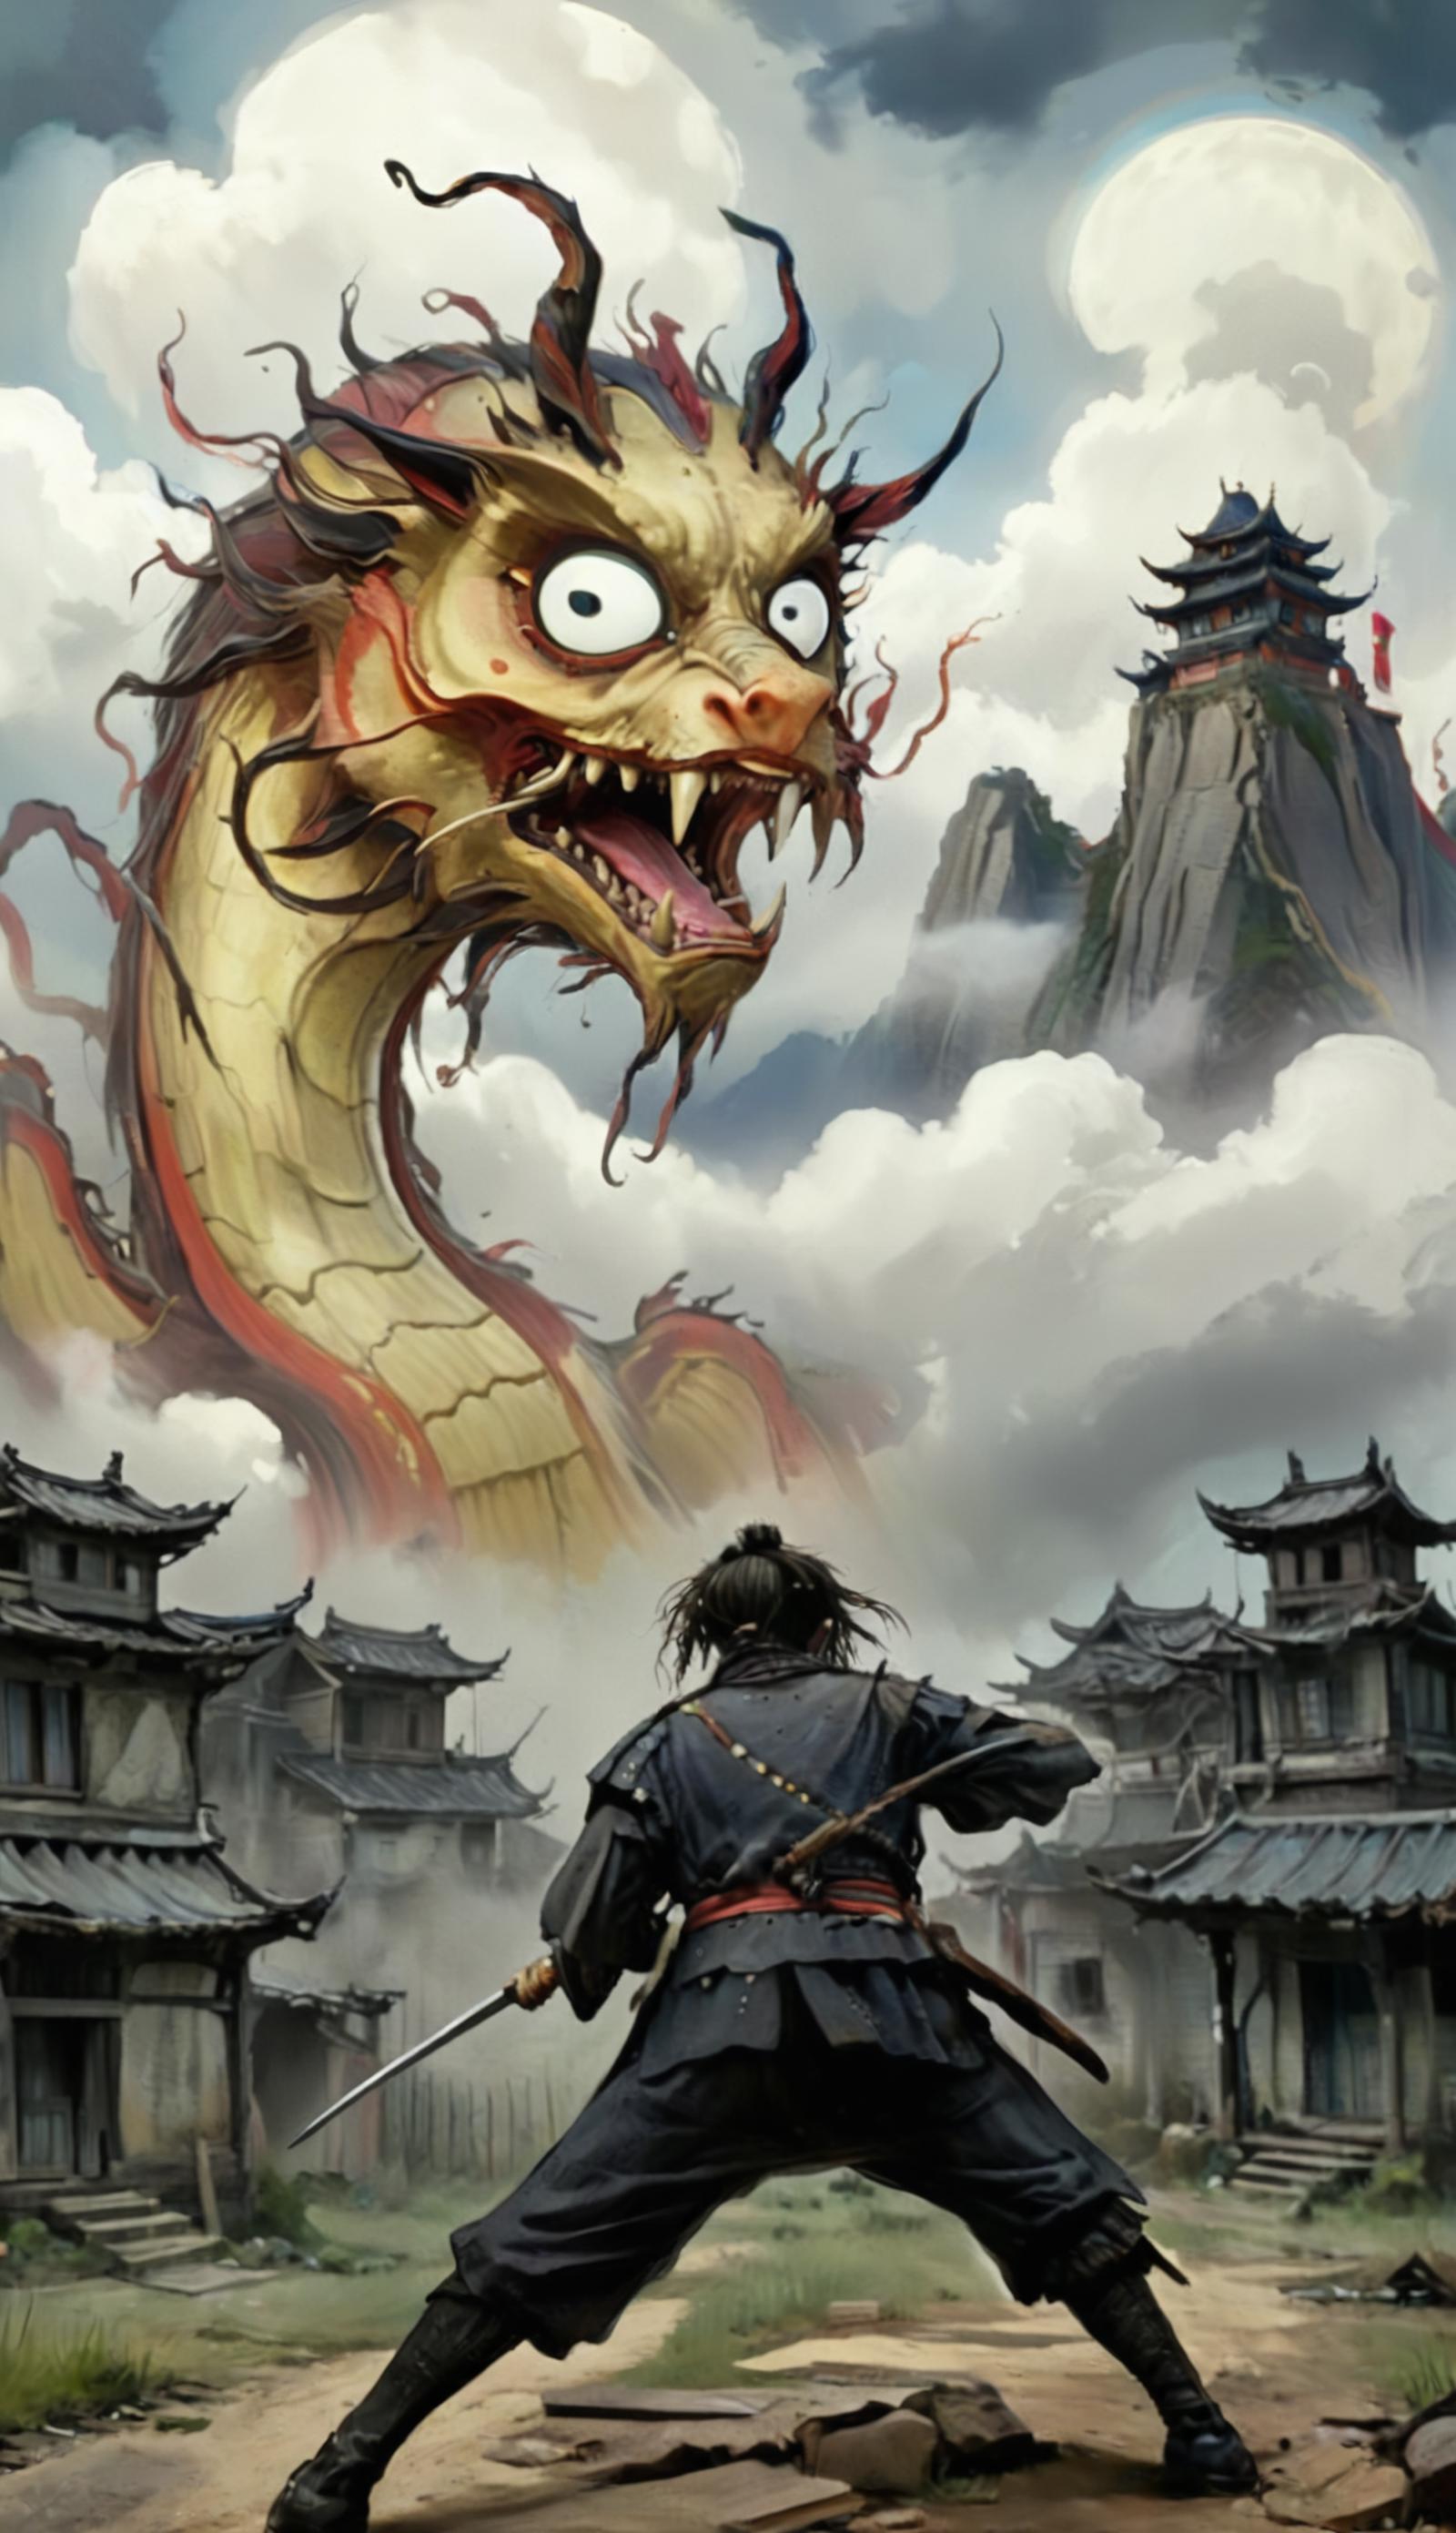 A man facing a giant dragon in a fantasy scene